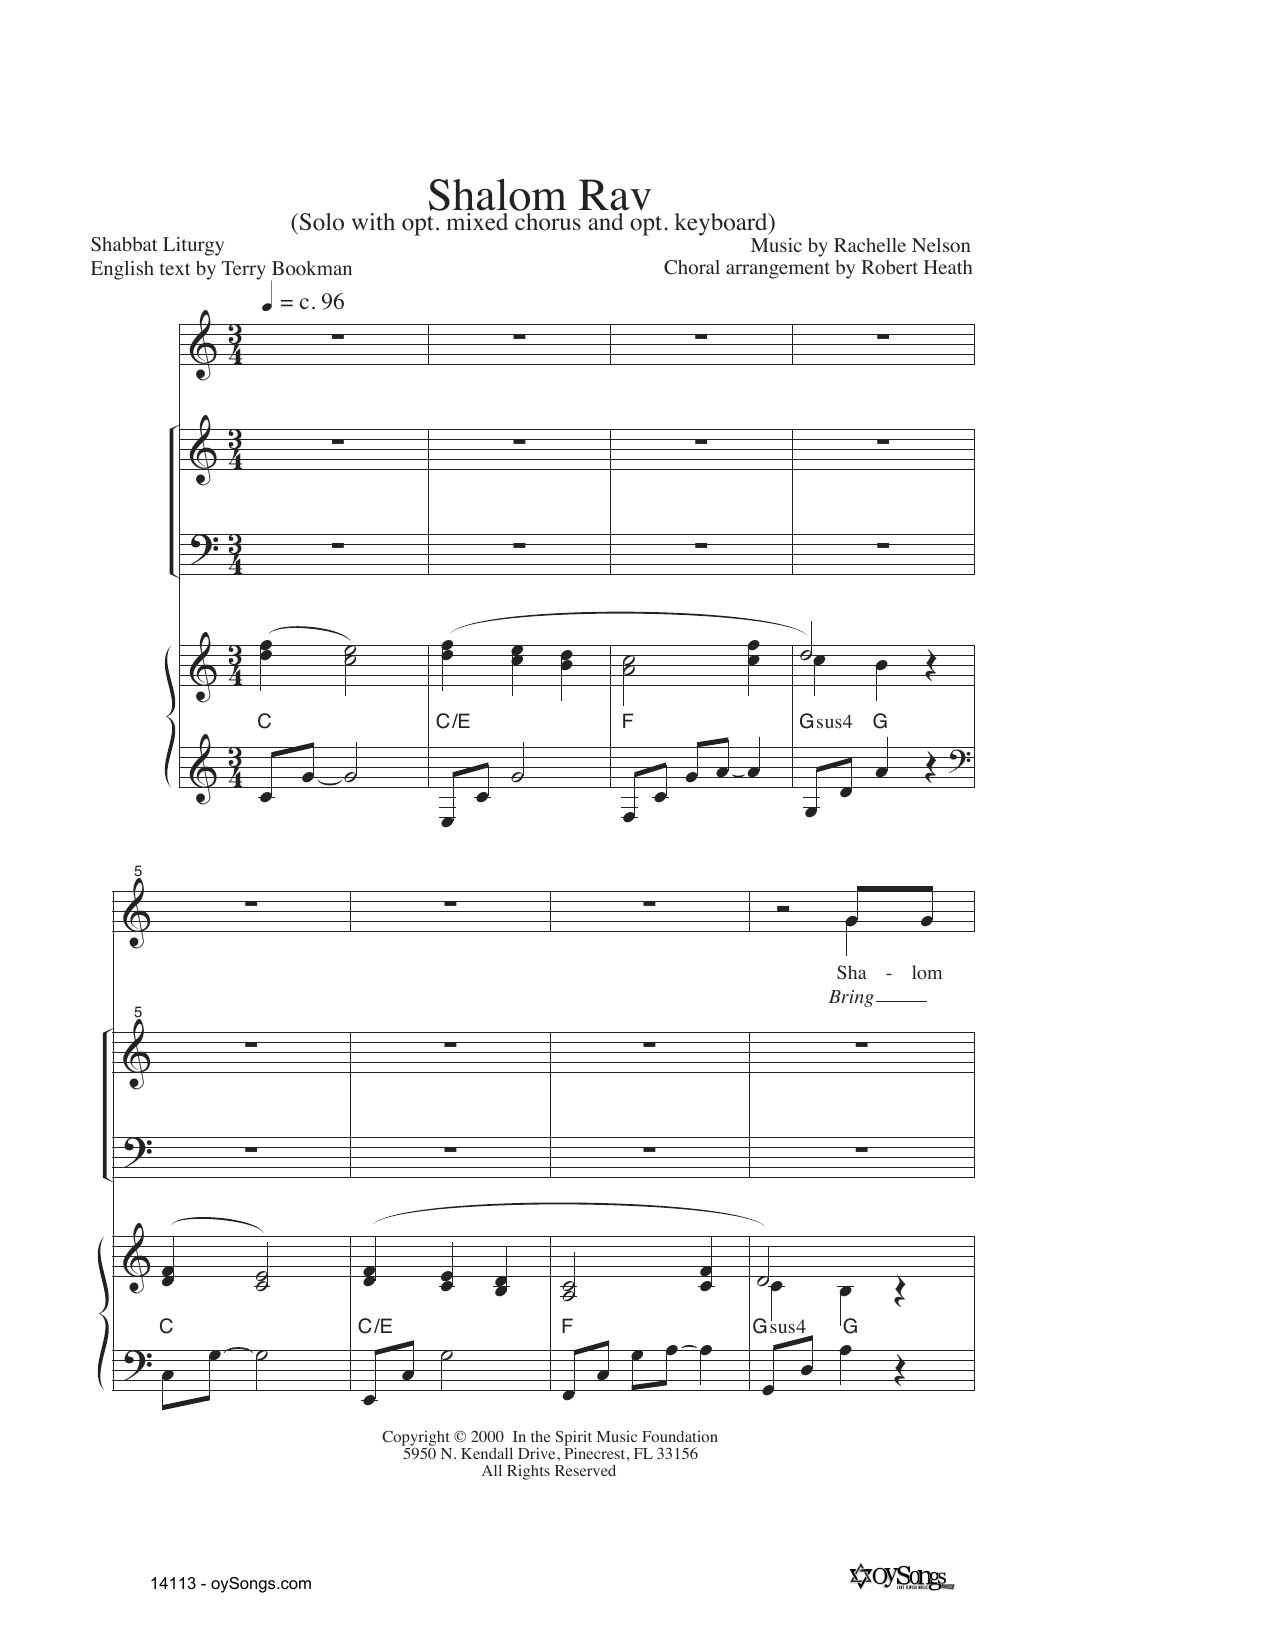 Rachelle Nelson Shalom Rav Sheet Music Notes & Chords for SATB Choir - Download or Print PDF